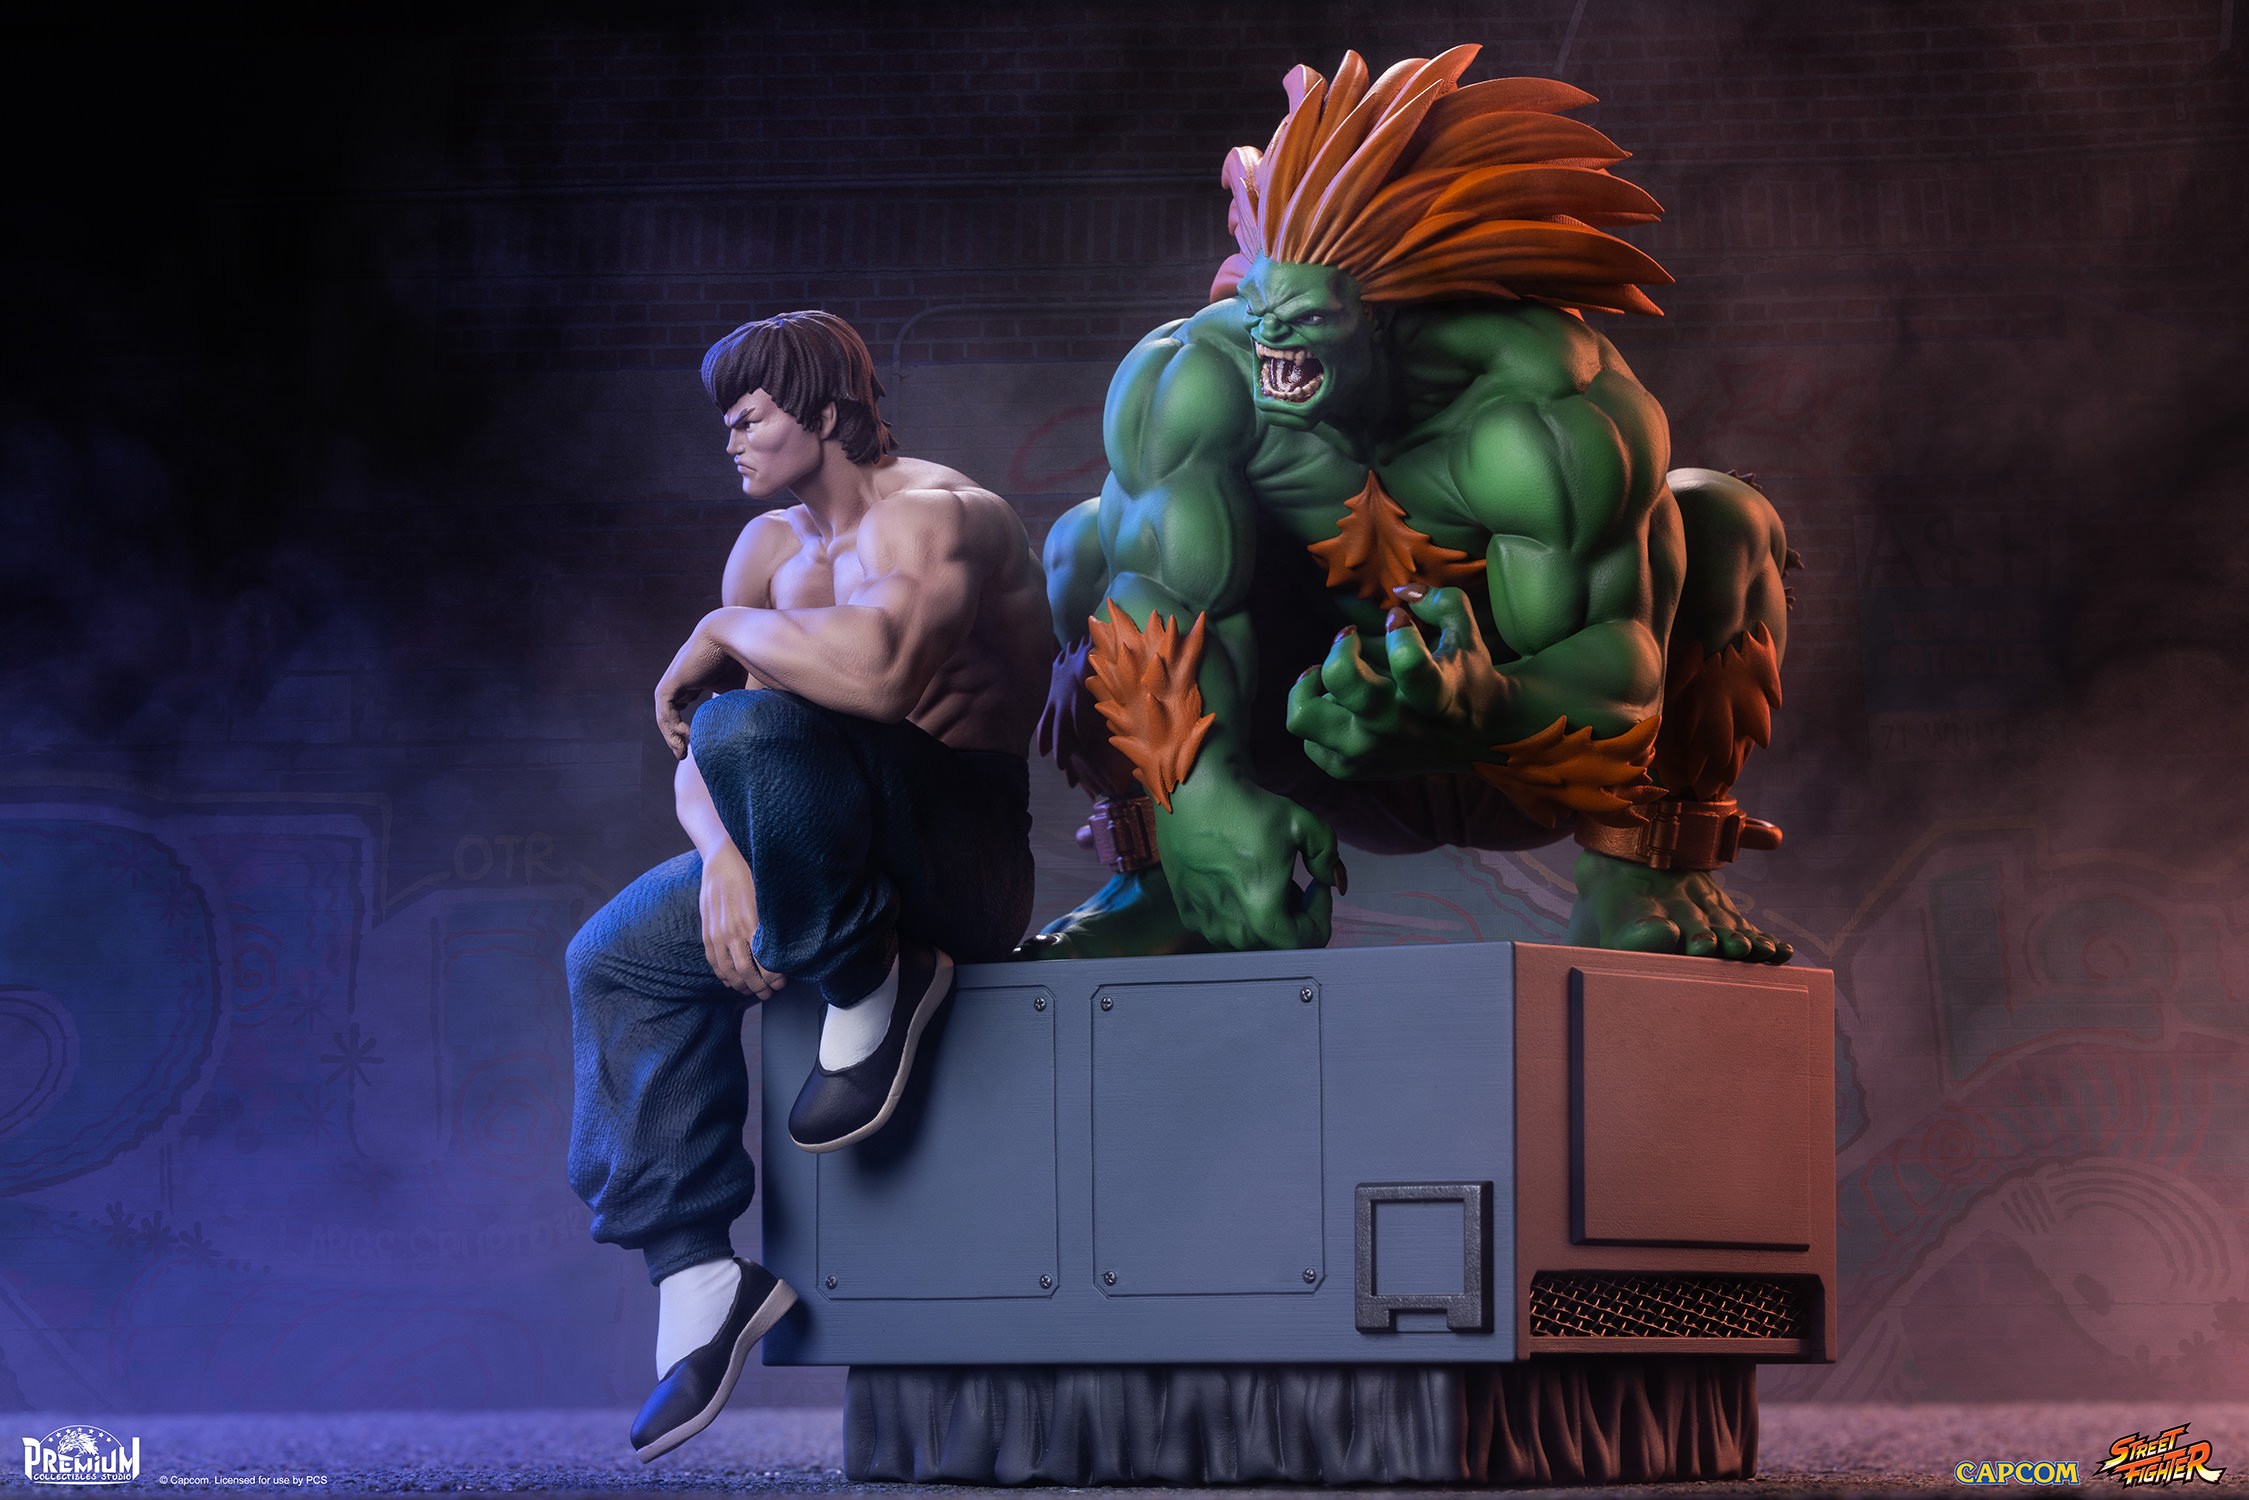 Street Fighter Street Jam M. Bison & Rolento 1/10 Scale Statue Set